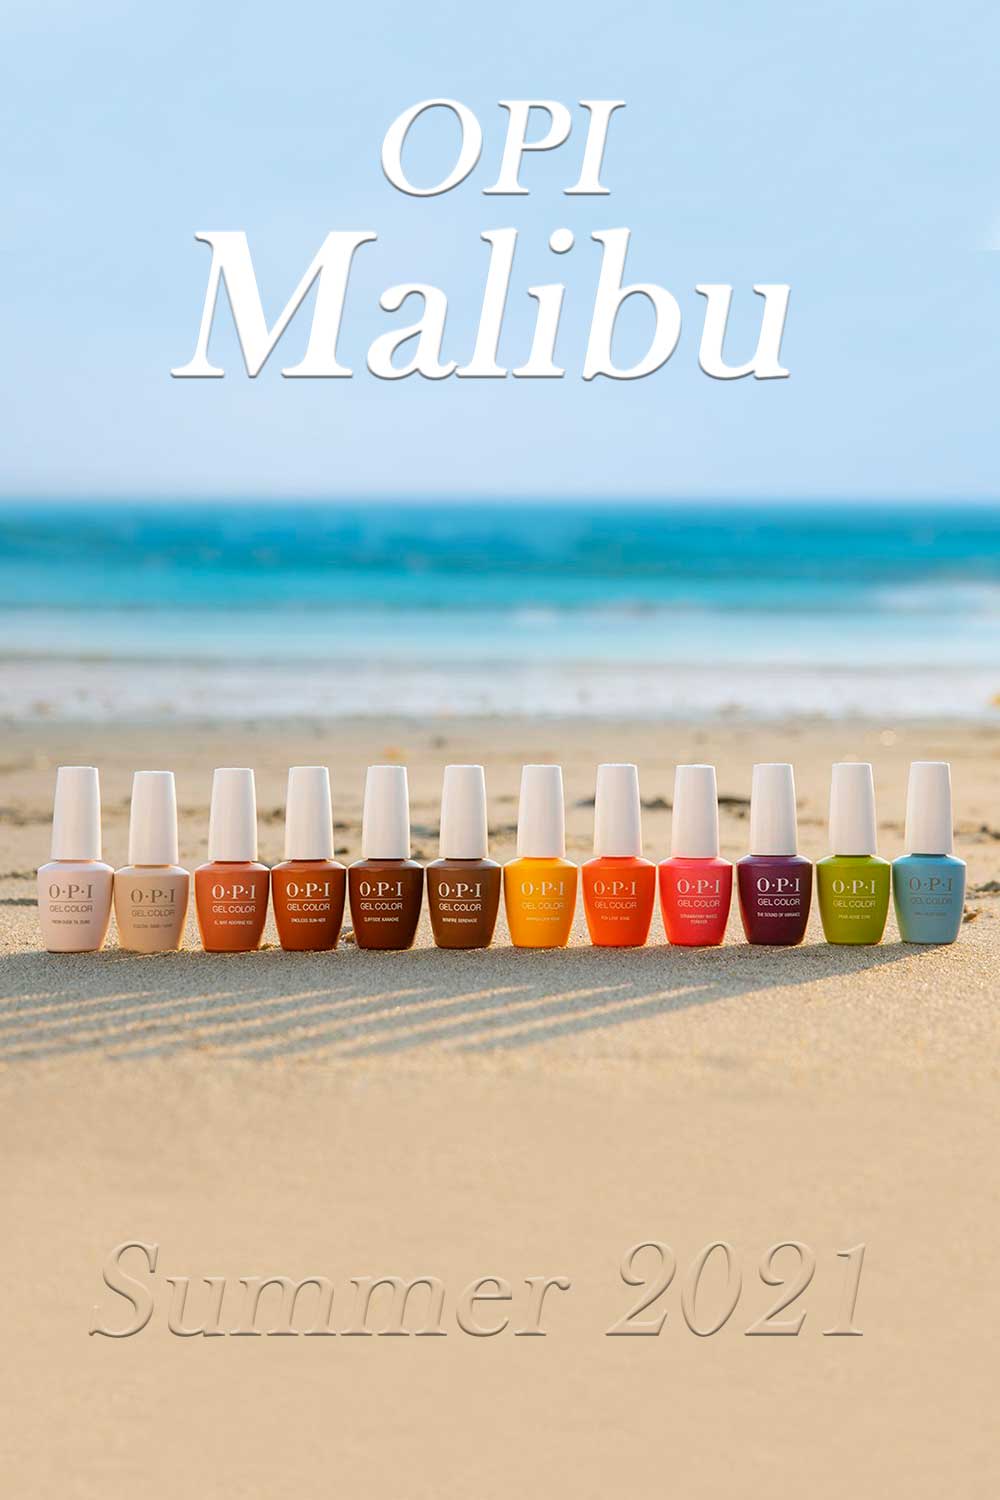 Malibu OPI Nail Polish Colors for Summer 2021, Malibu Collection 2021